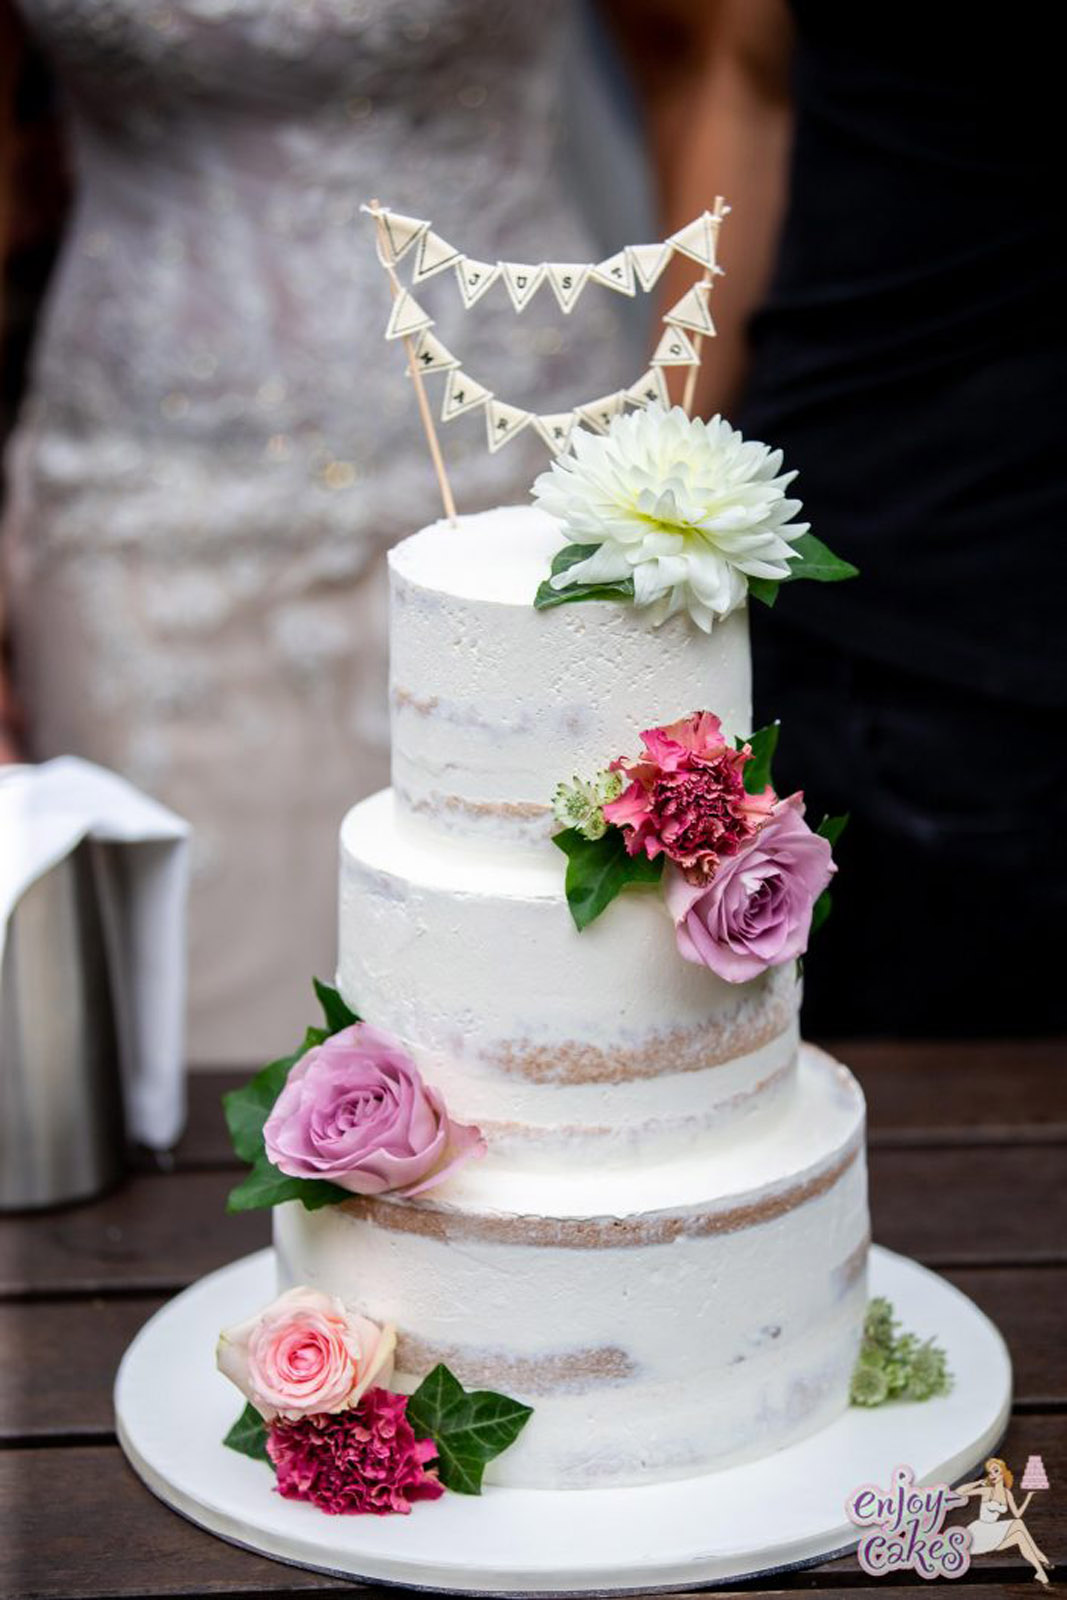 Semi-naked wedding cake met verse bloemen